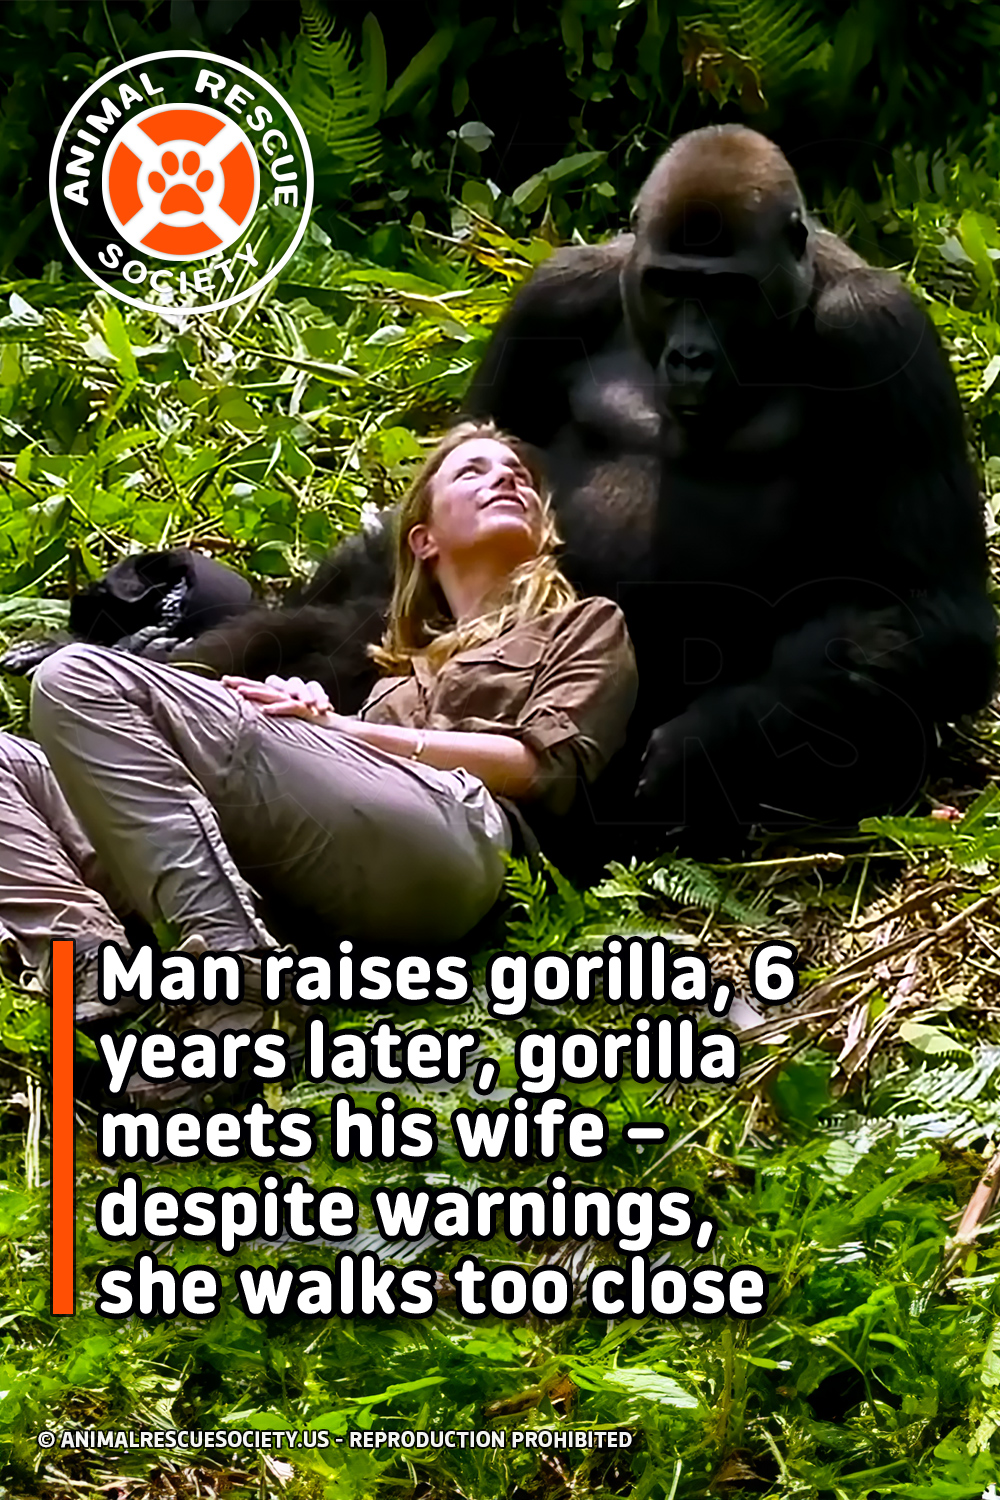 Man raises gorilla, 6 years later, gorilla meets his wife – despite warnings, she walks too close